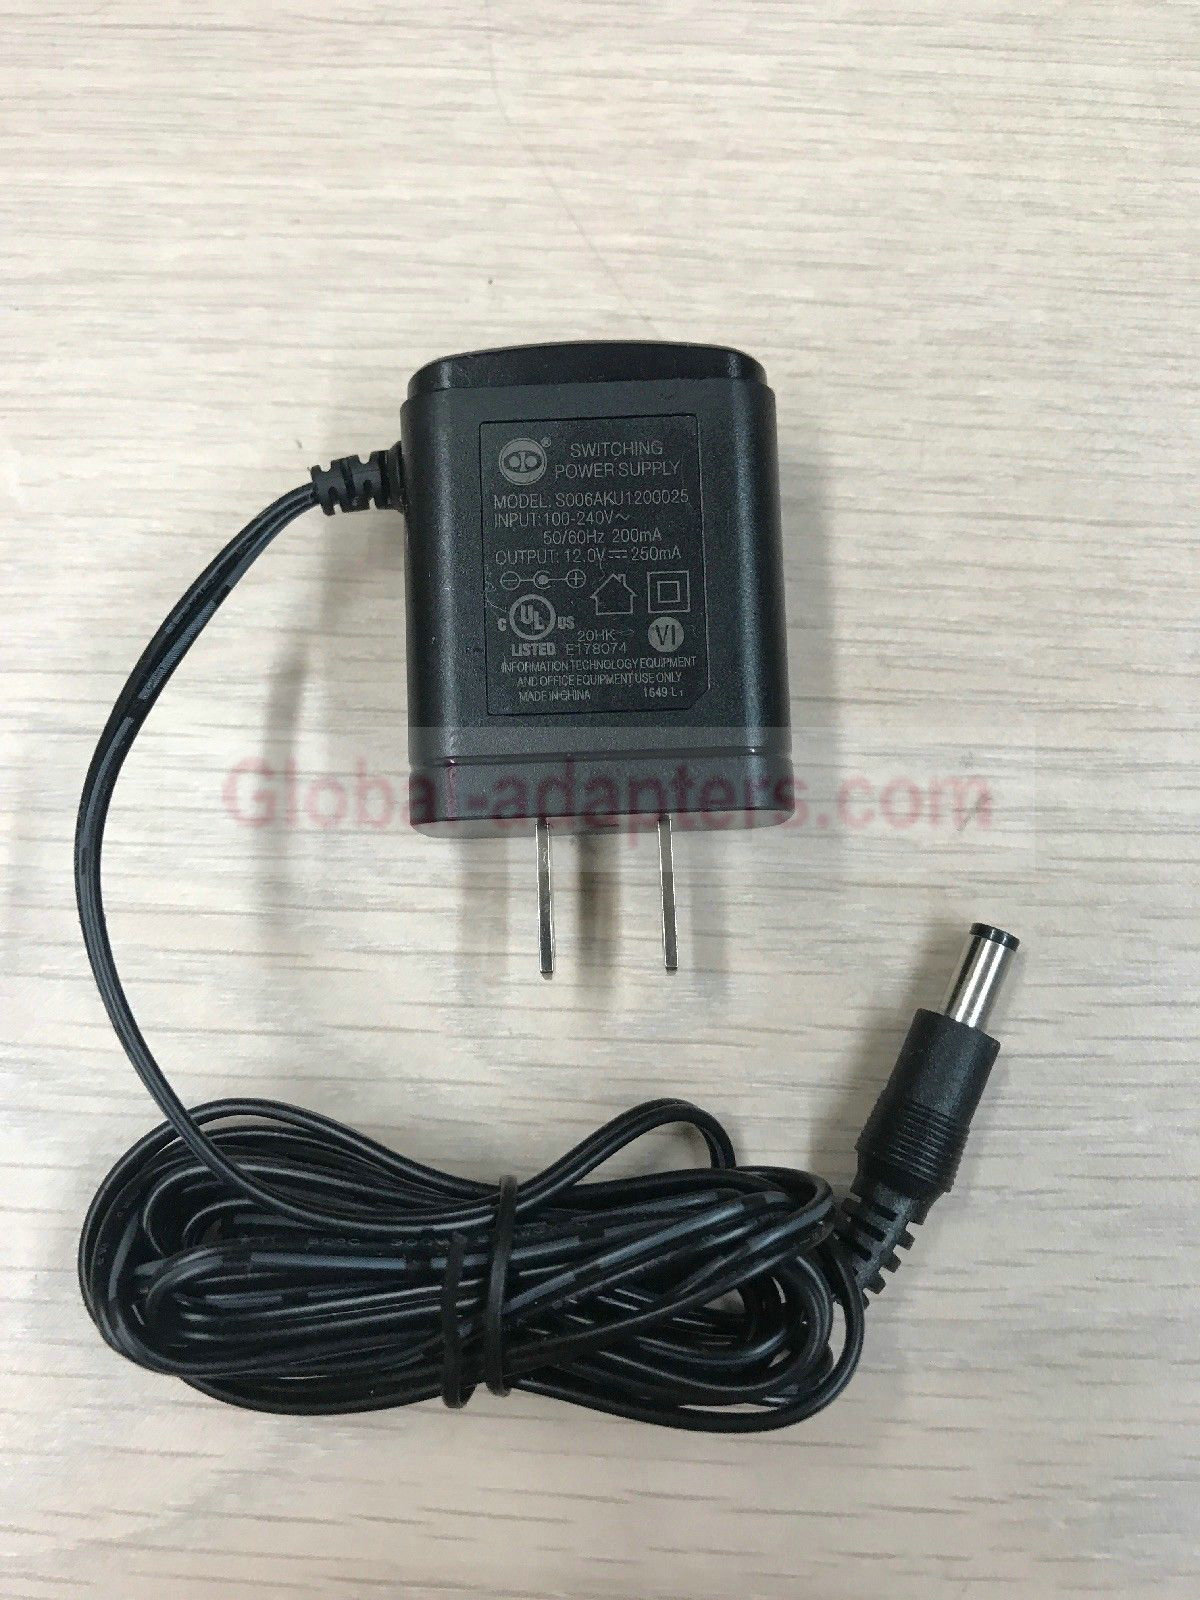 NEW 12V 250mA S006AKU1200025 AC/DC Power Supply Adapter